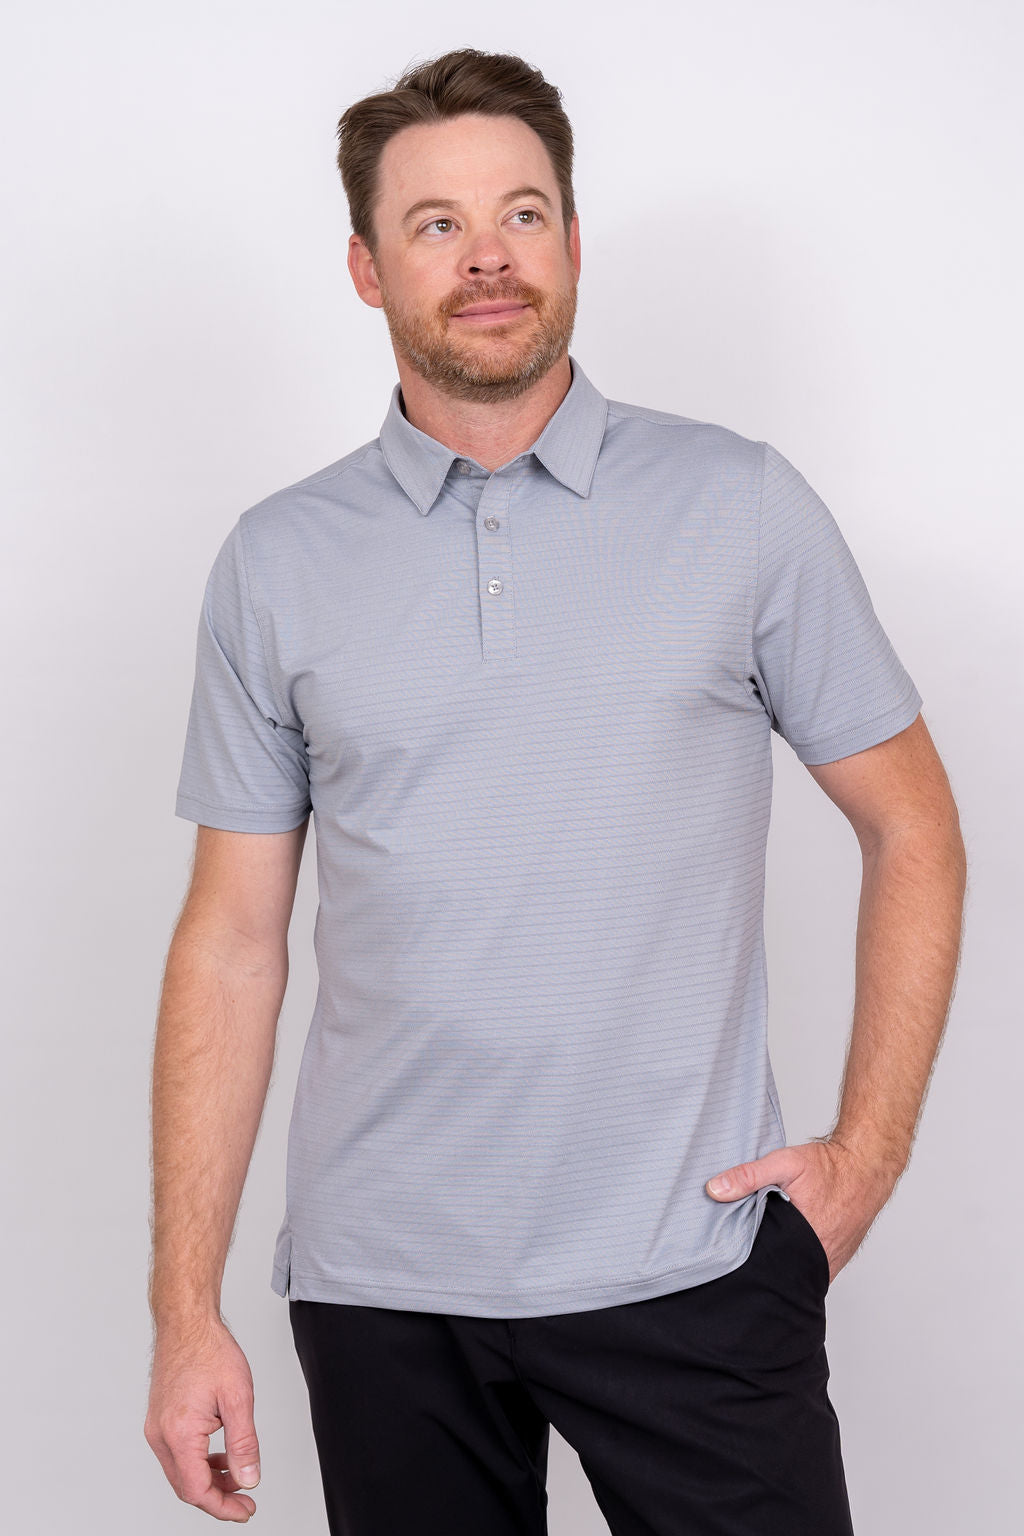 TJ Premier Golf Shirt - Grey Men's Golf Shirt Taylor Jordan Apparel 